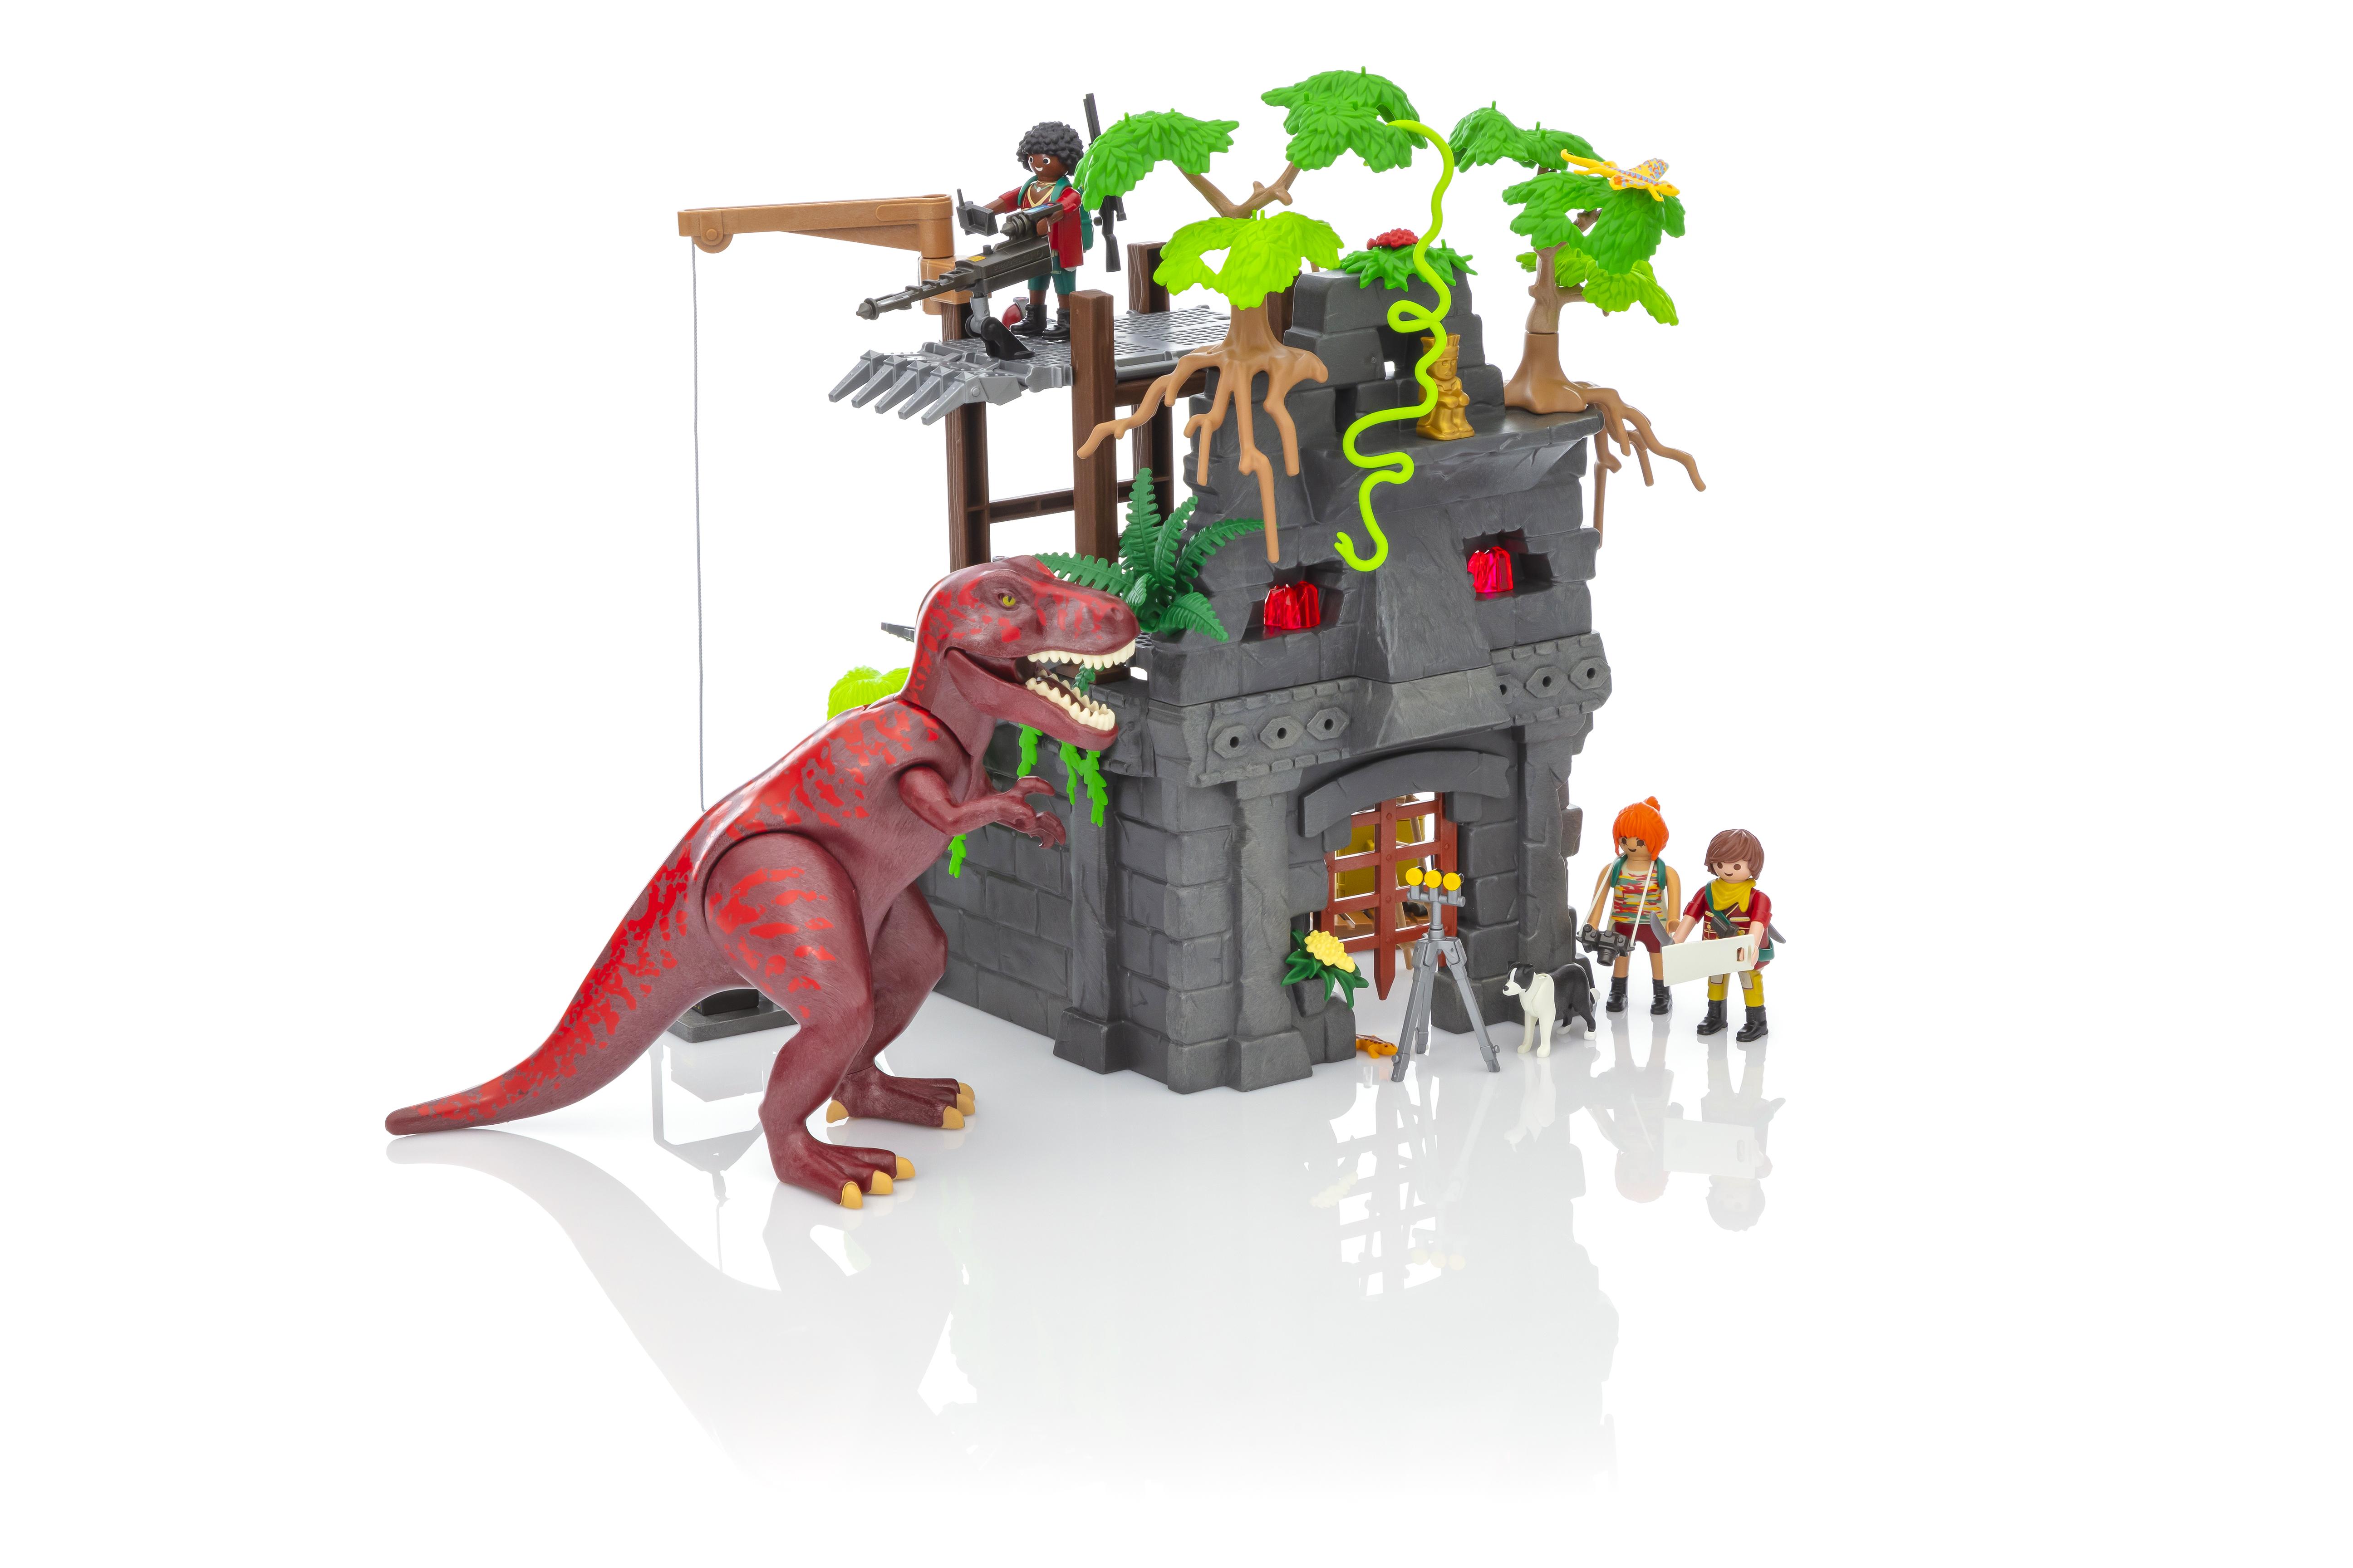 playmobil tyrannosaure